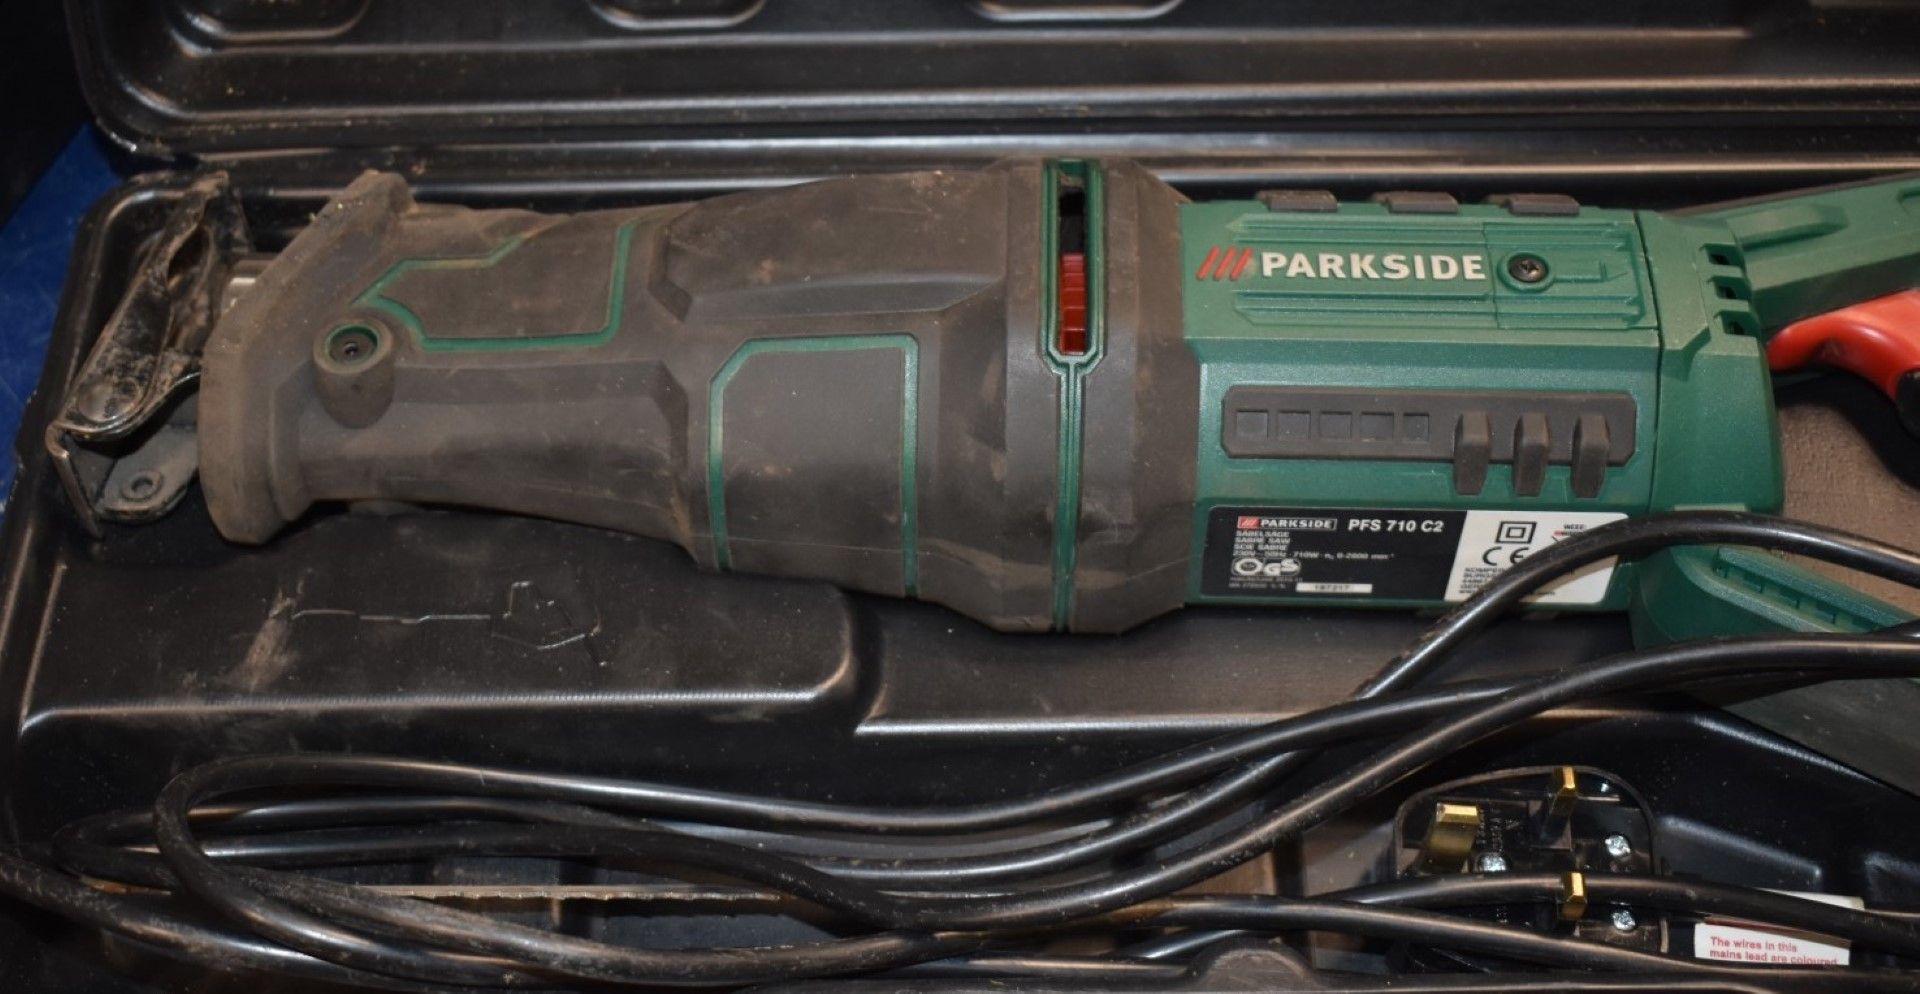 1 x Parkside Sabre Saw With Carry Case 240v Model PFS 710 C2 PME172 - Image 6 of 6